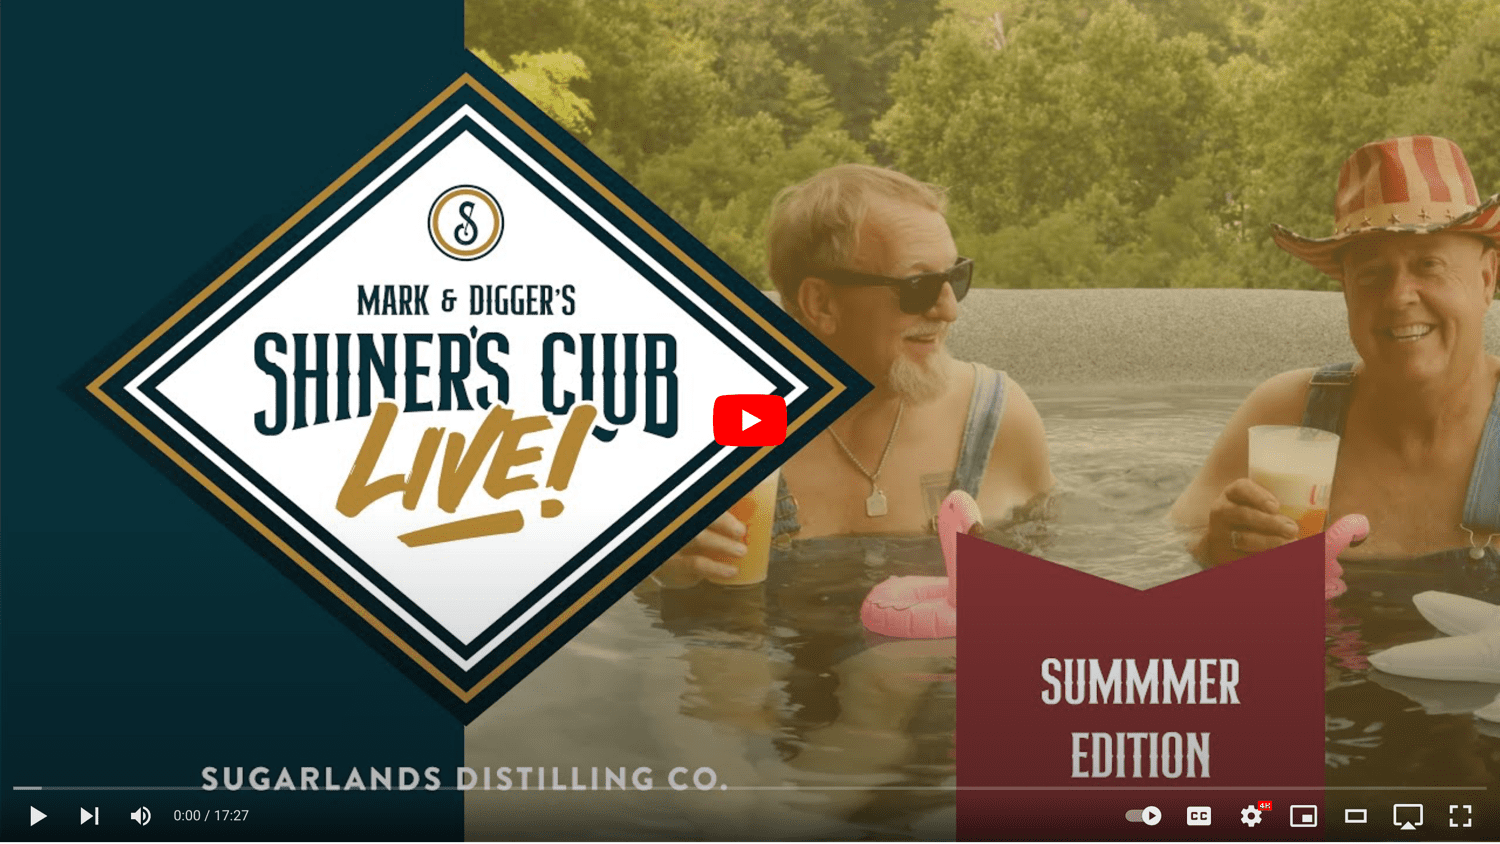 Mark & Digger's Shiner's Club LIVE! Summer Edition